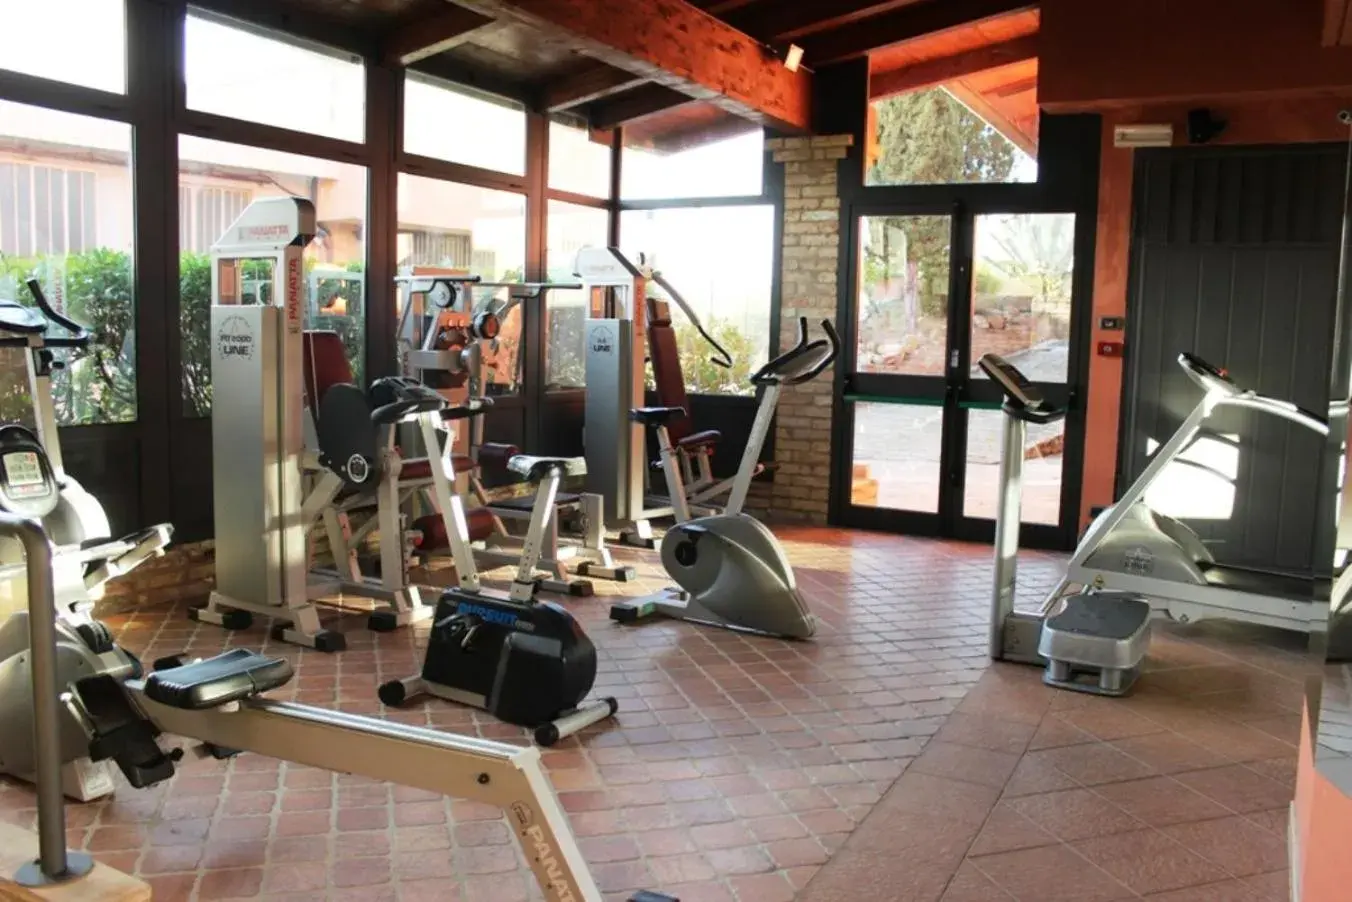 Fitness centre/facilities, Fitness Center/Facilities in Casanova - Wellness Center La Grotta Etrusca